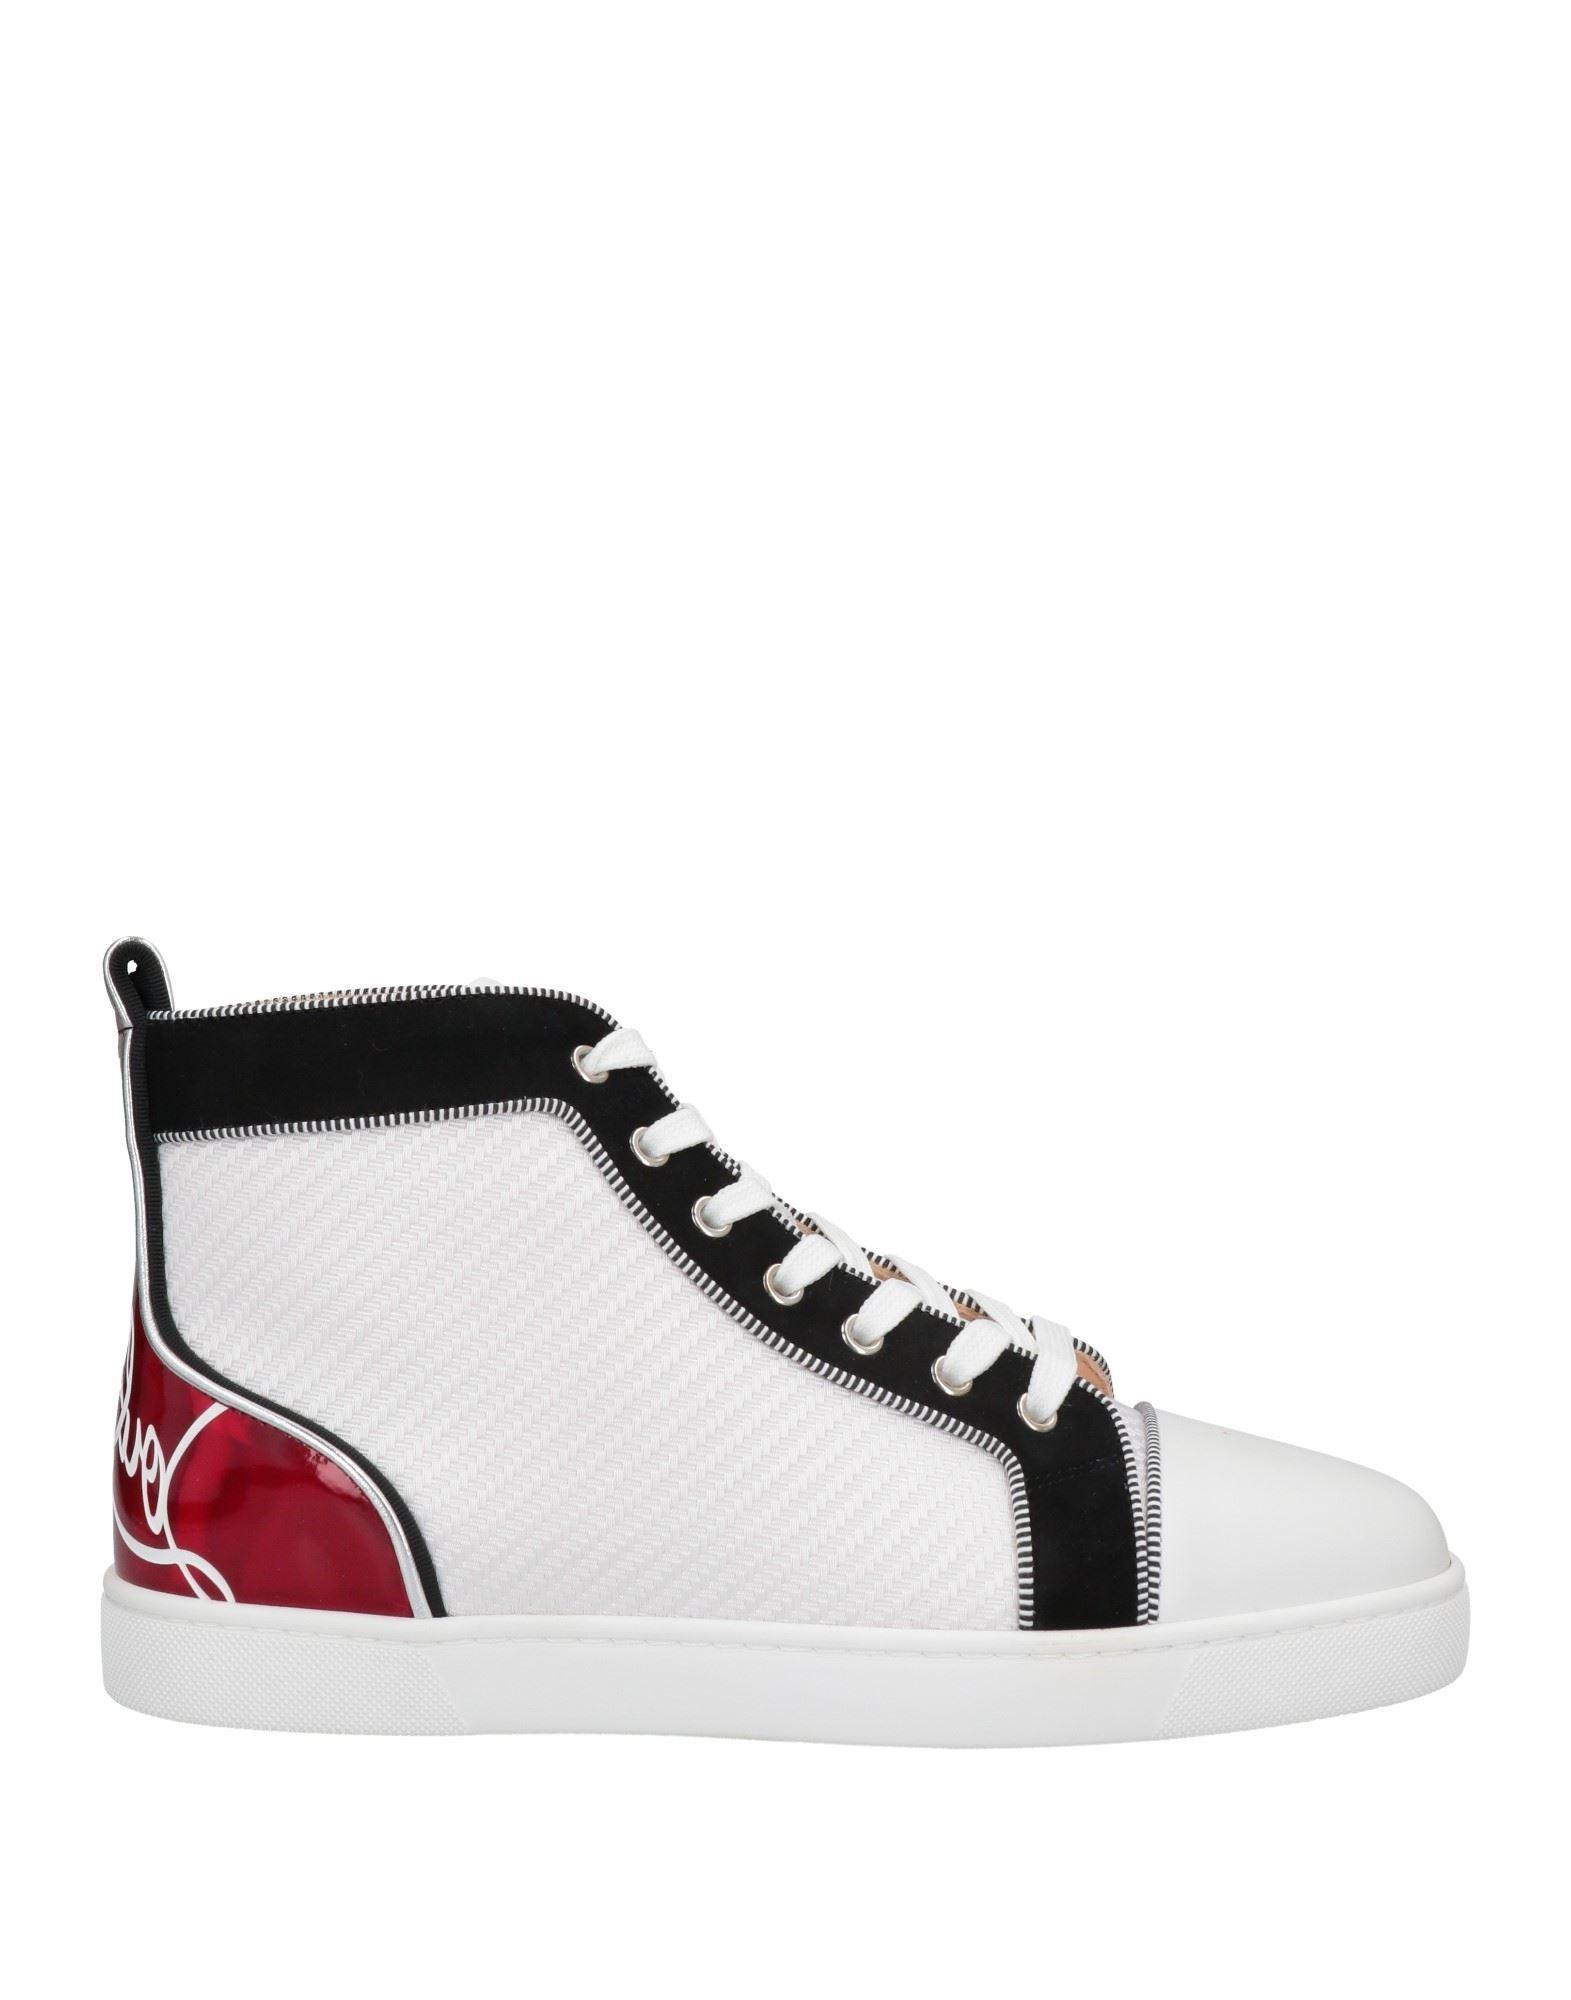 Christian Louboutin Sneakers Herren Farbe Weiss In White